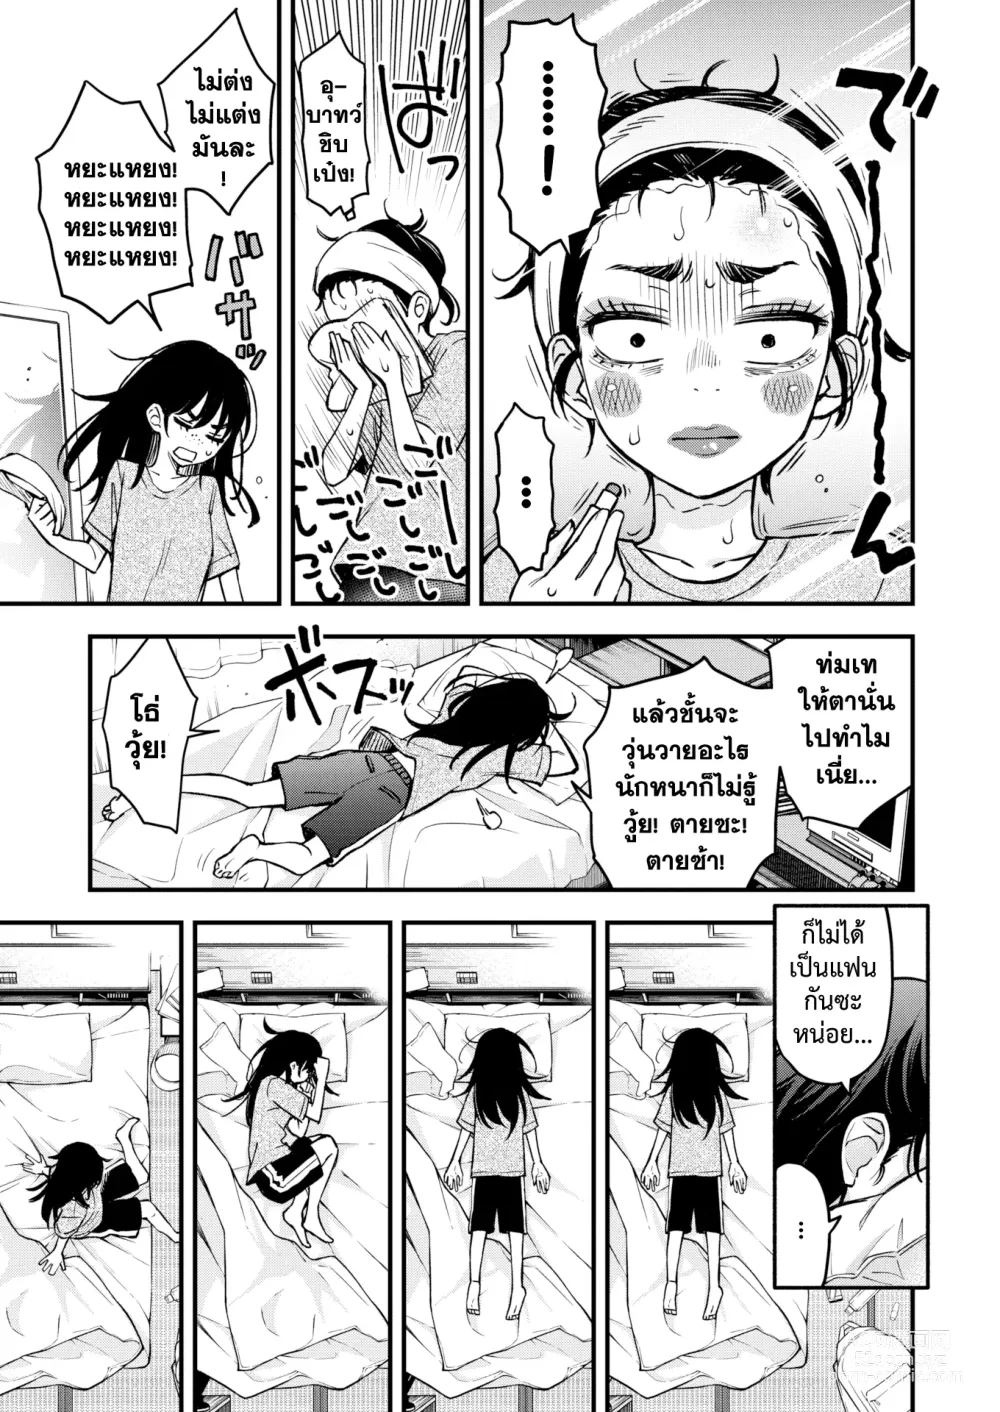 Page 8 of manga เพลงรักของคนหม่น #2 -บทอามาโนะ ยุยกะ-